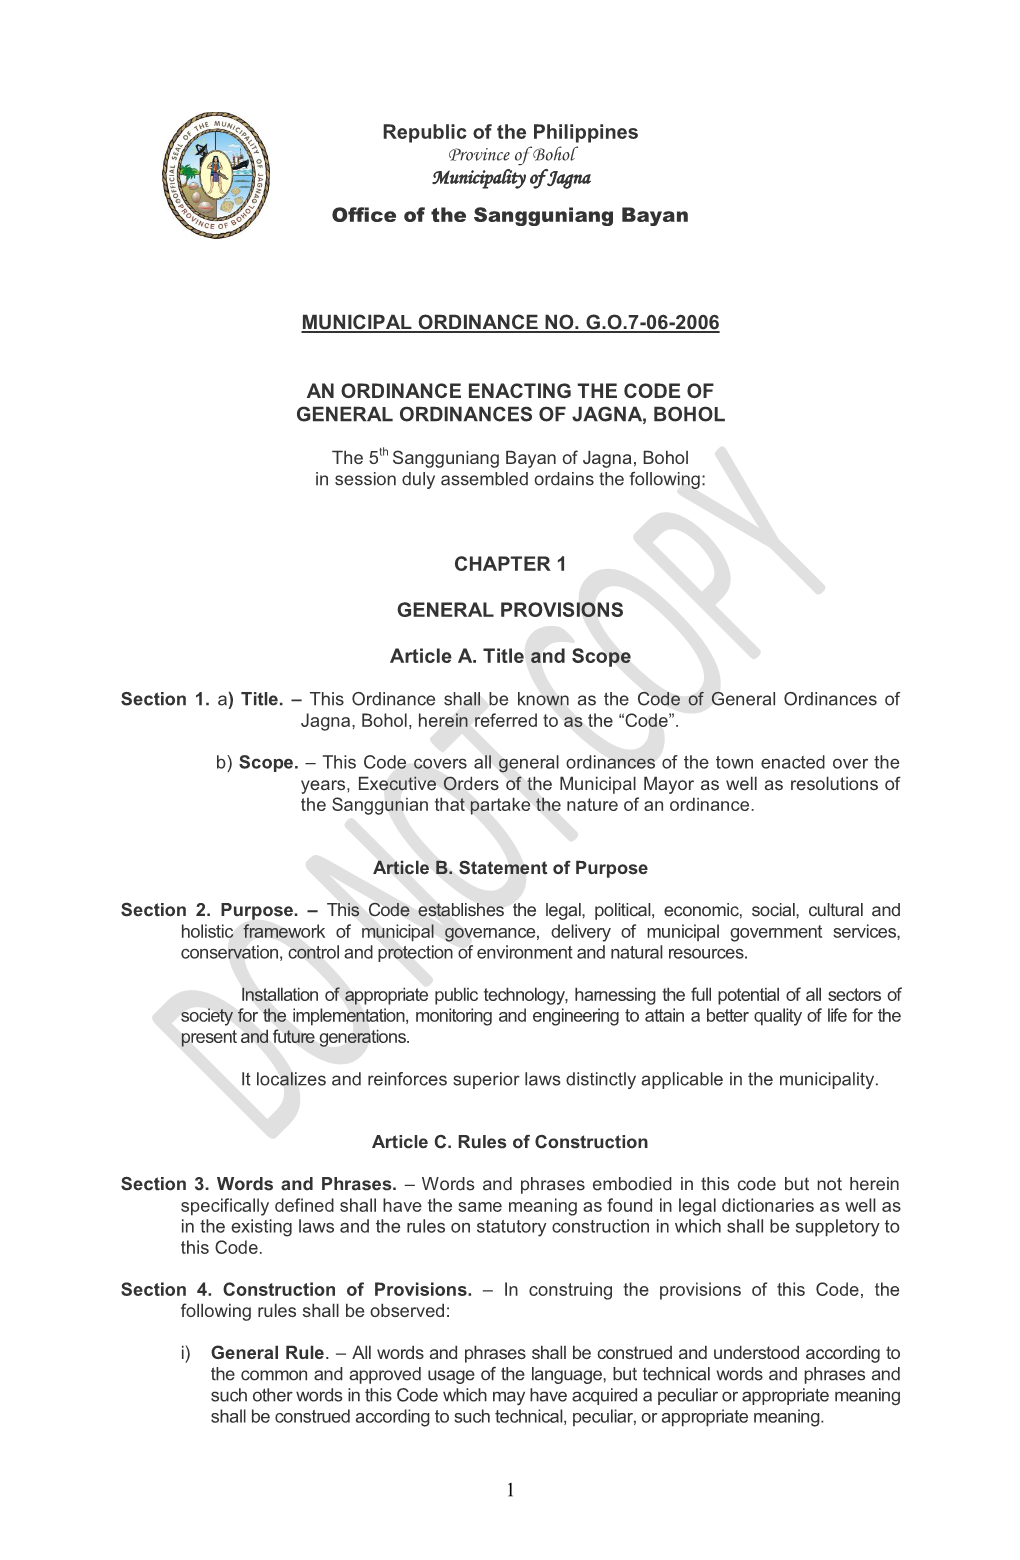 Jagna Code of General Ordinances 2006